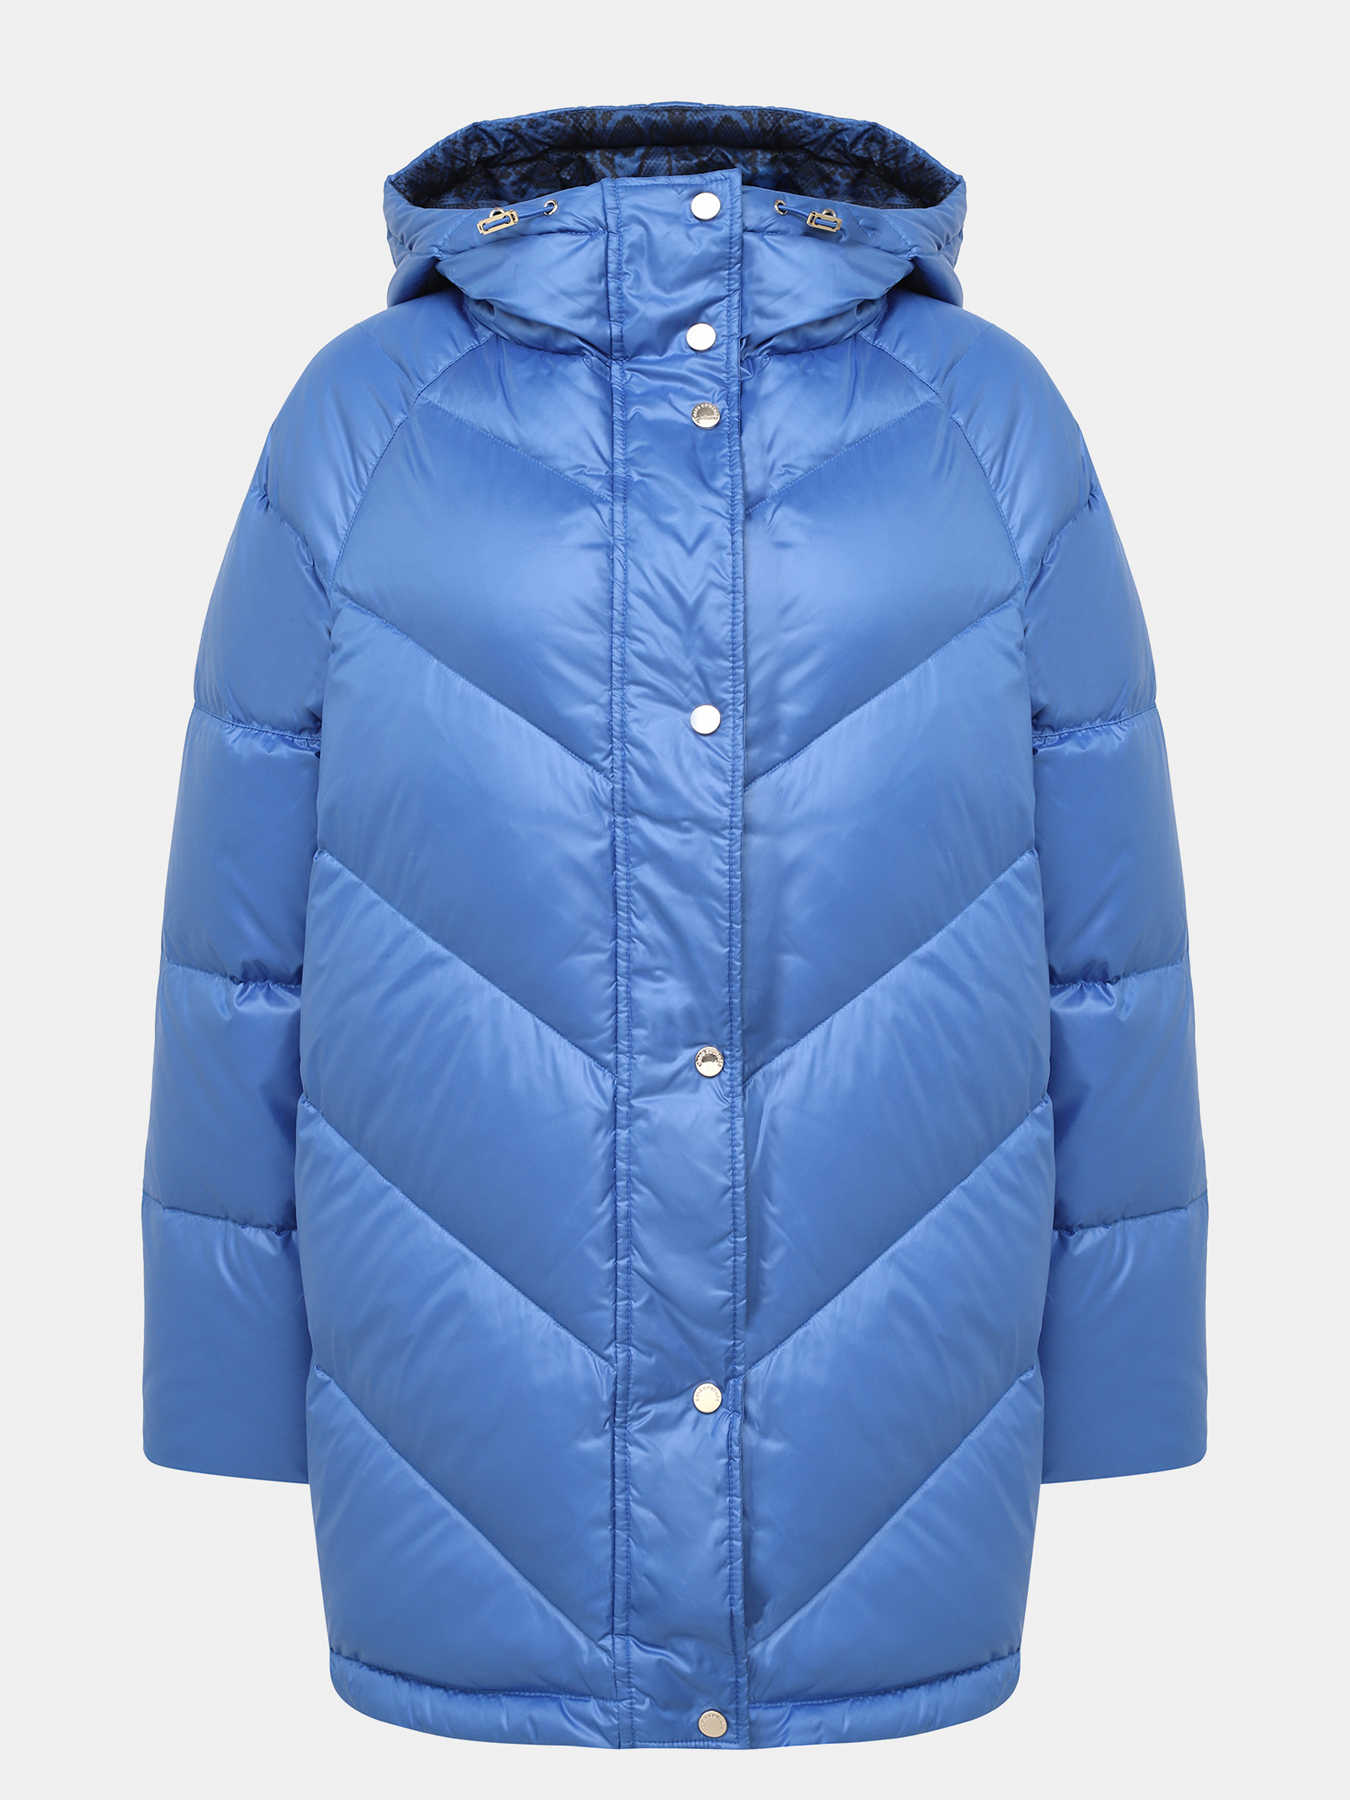 Куртка ORSA Couture 367408-023, цвет синий, размер 46 - фото 1